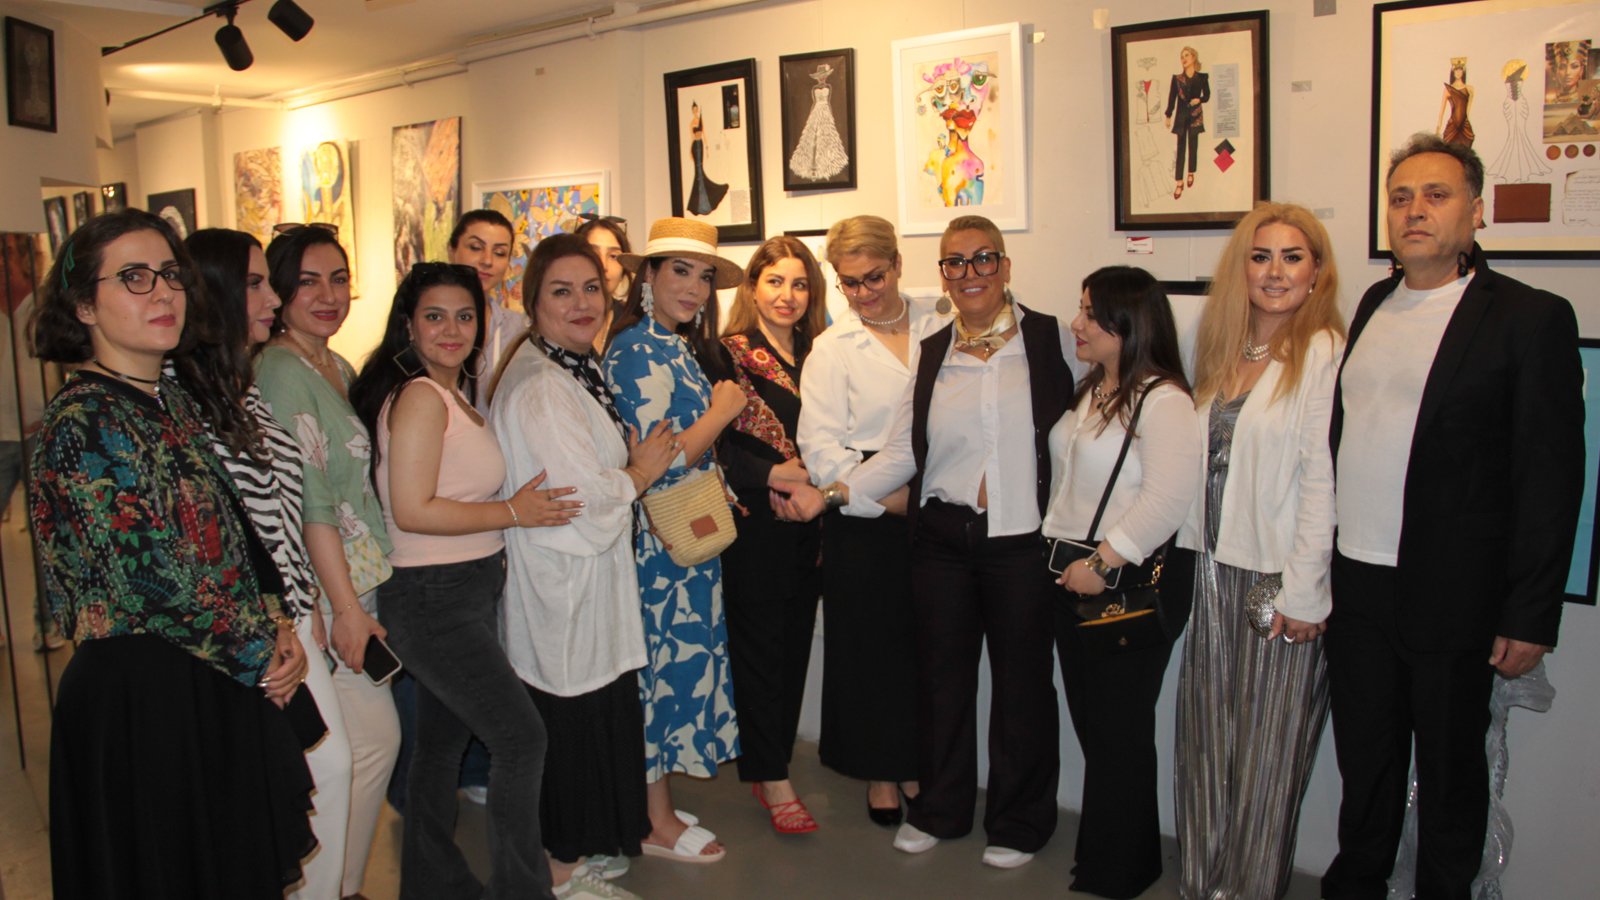 Next Pera Art Gallery, Mahomahi Grup Sergisi, Zahra Kamali Aghdam